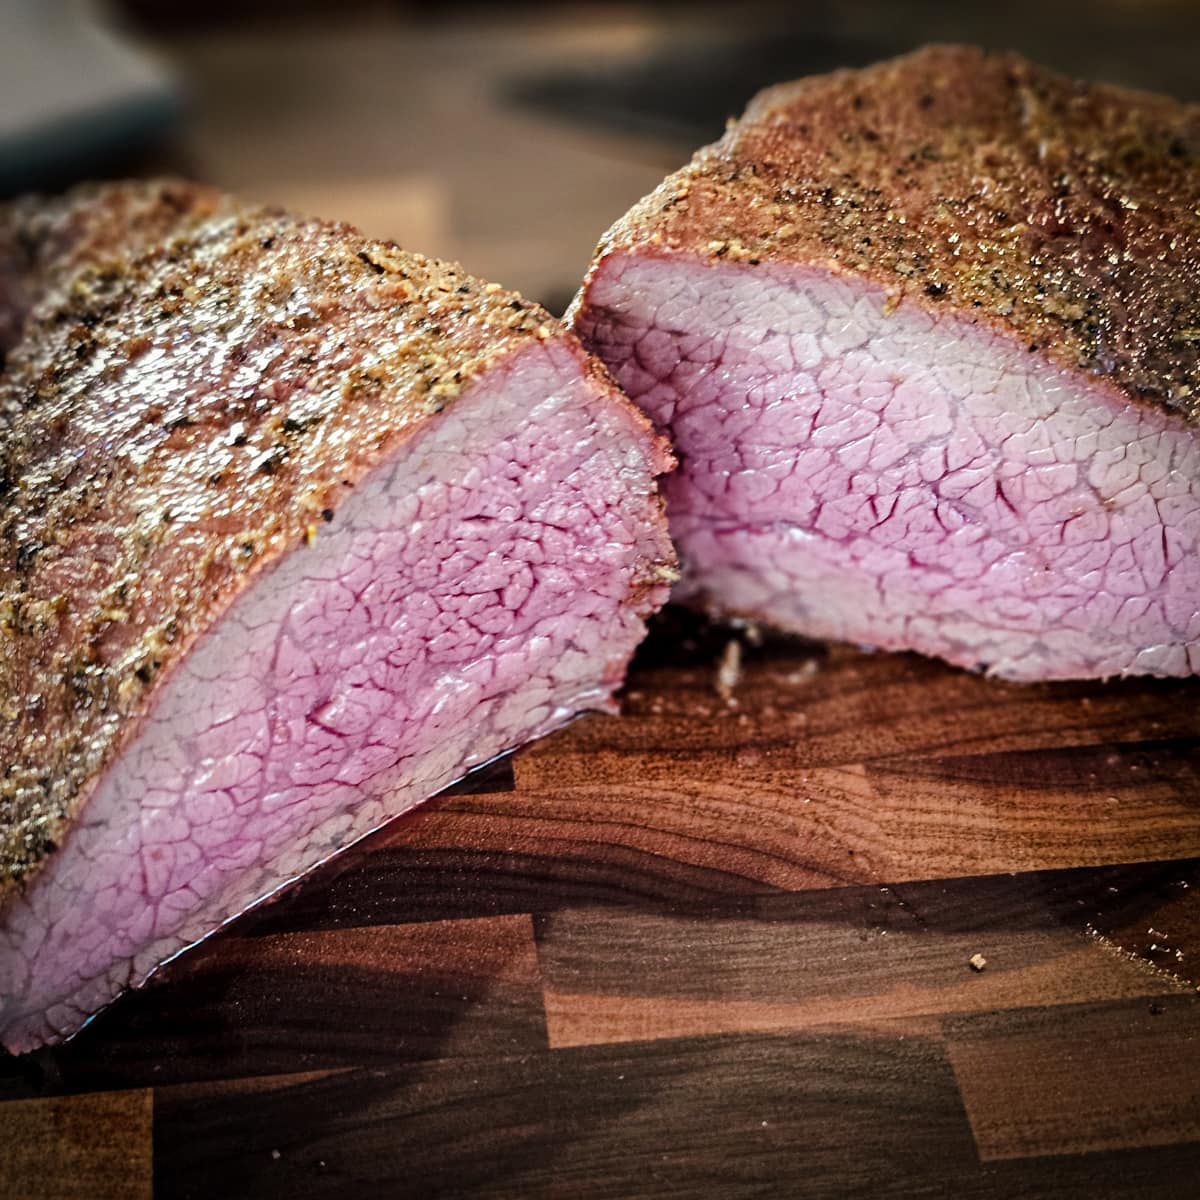 Medium rare tri tip roast on a cutting board.